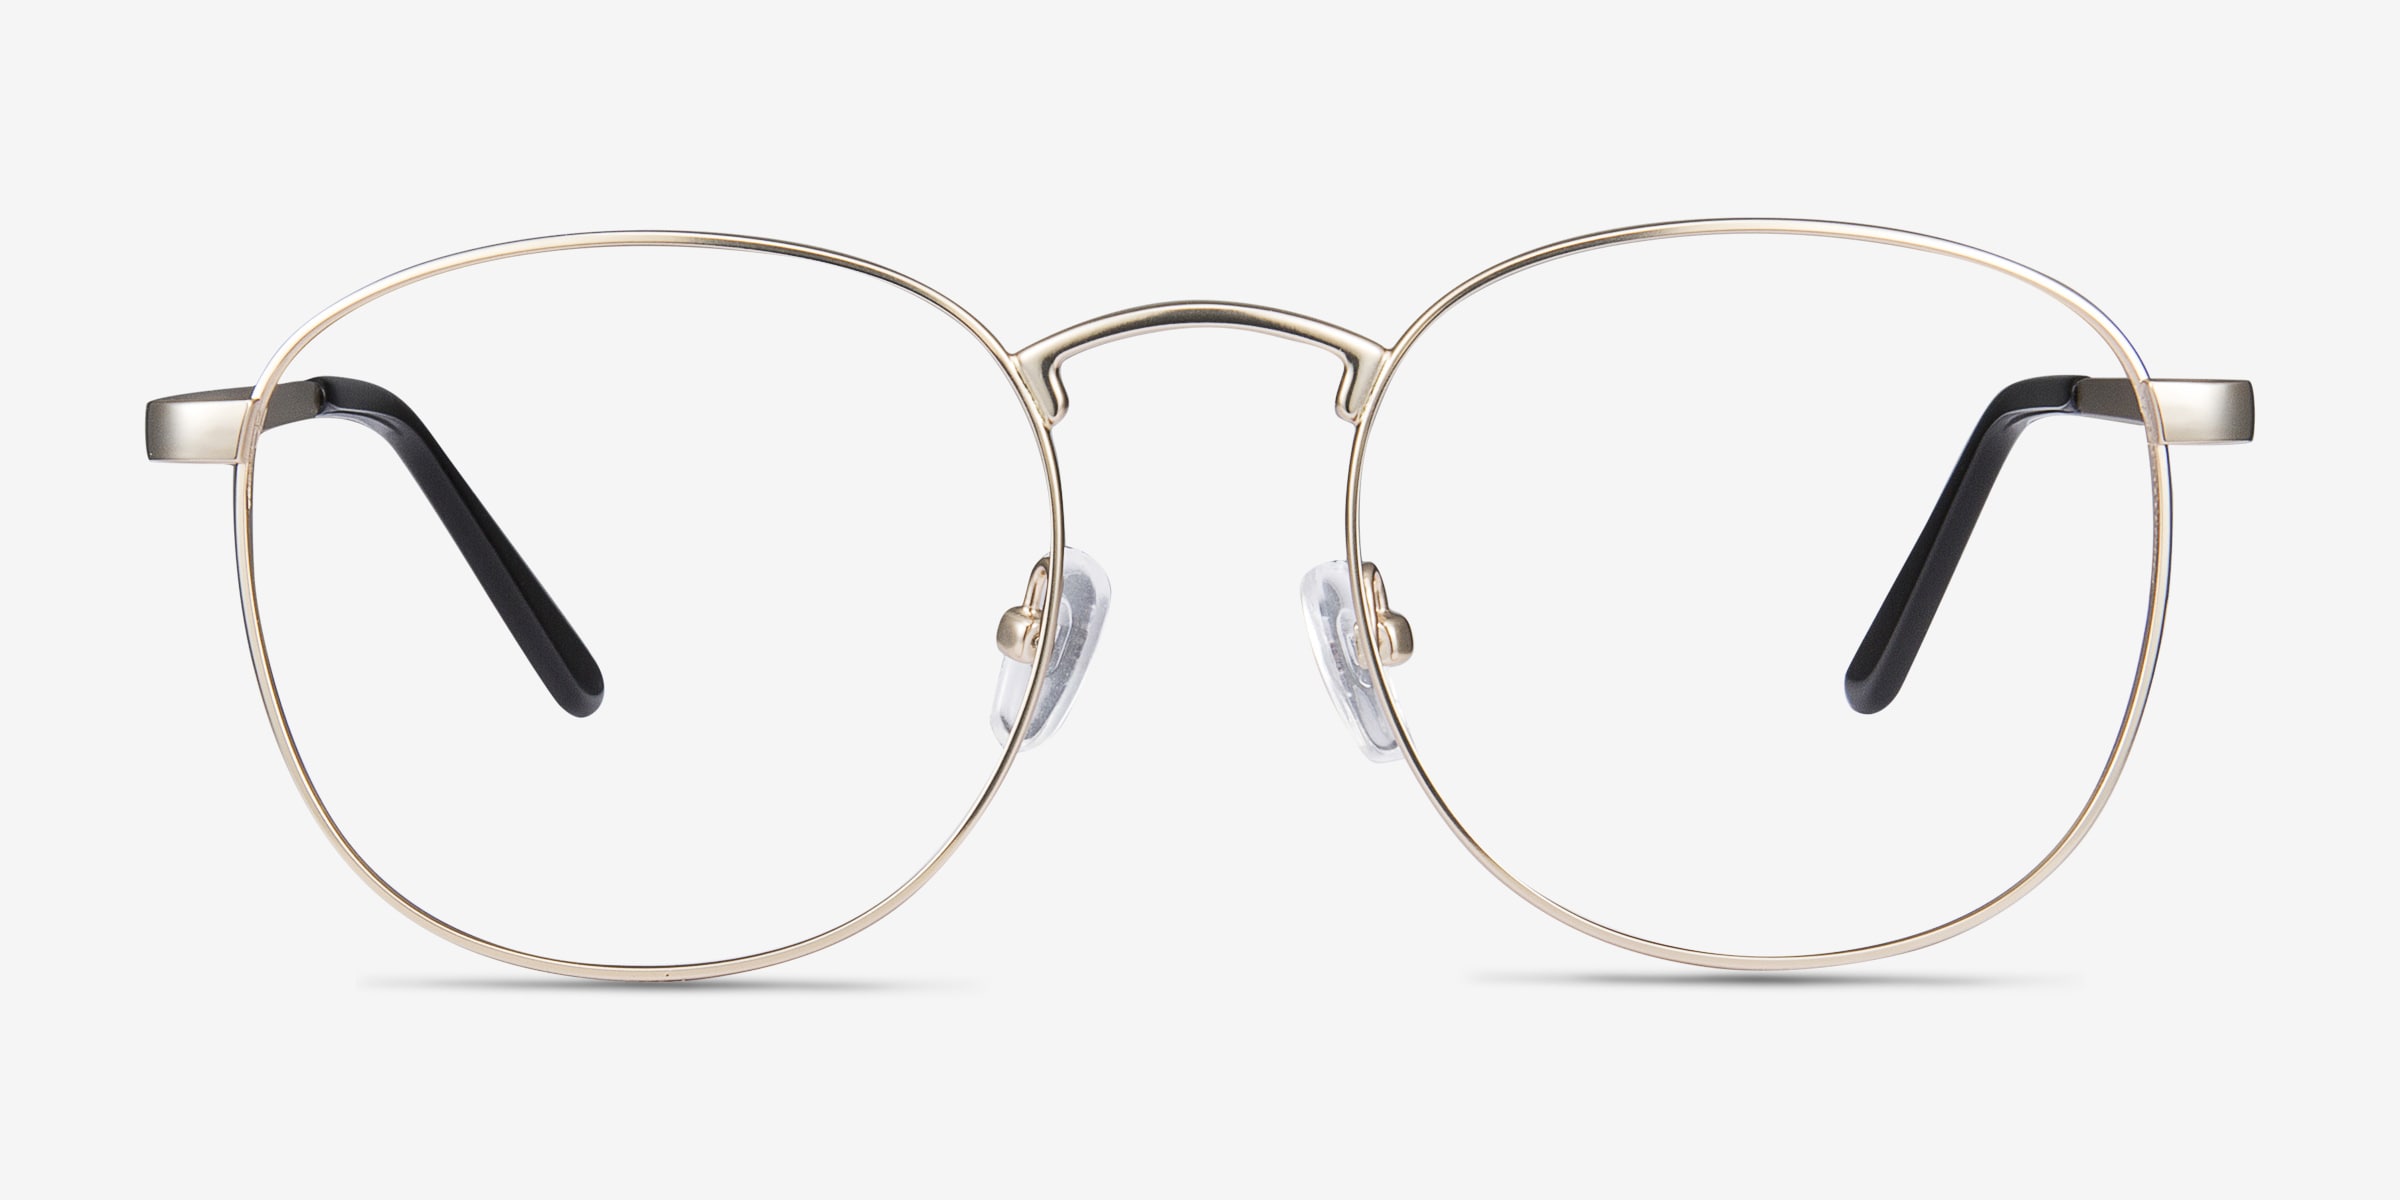 EyeBuyDirect Clear Premium Lenses $30 off $60+ order + $5.95 S&H